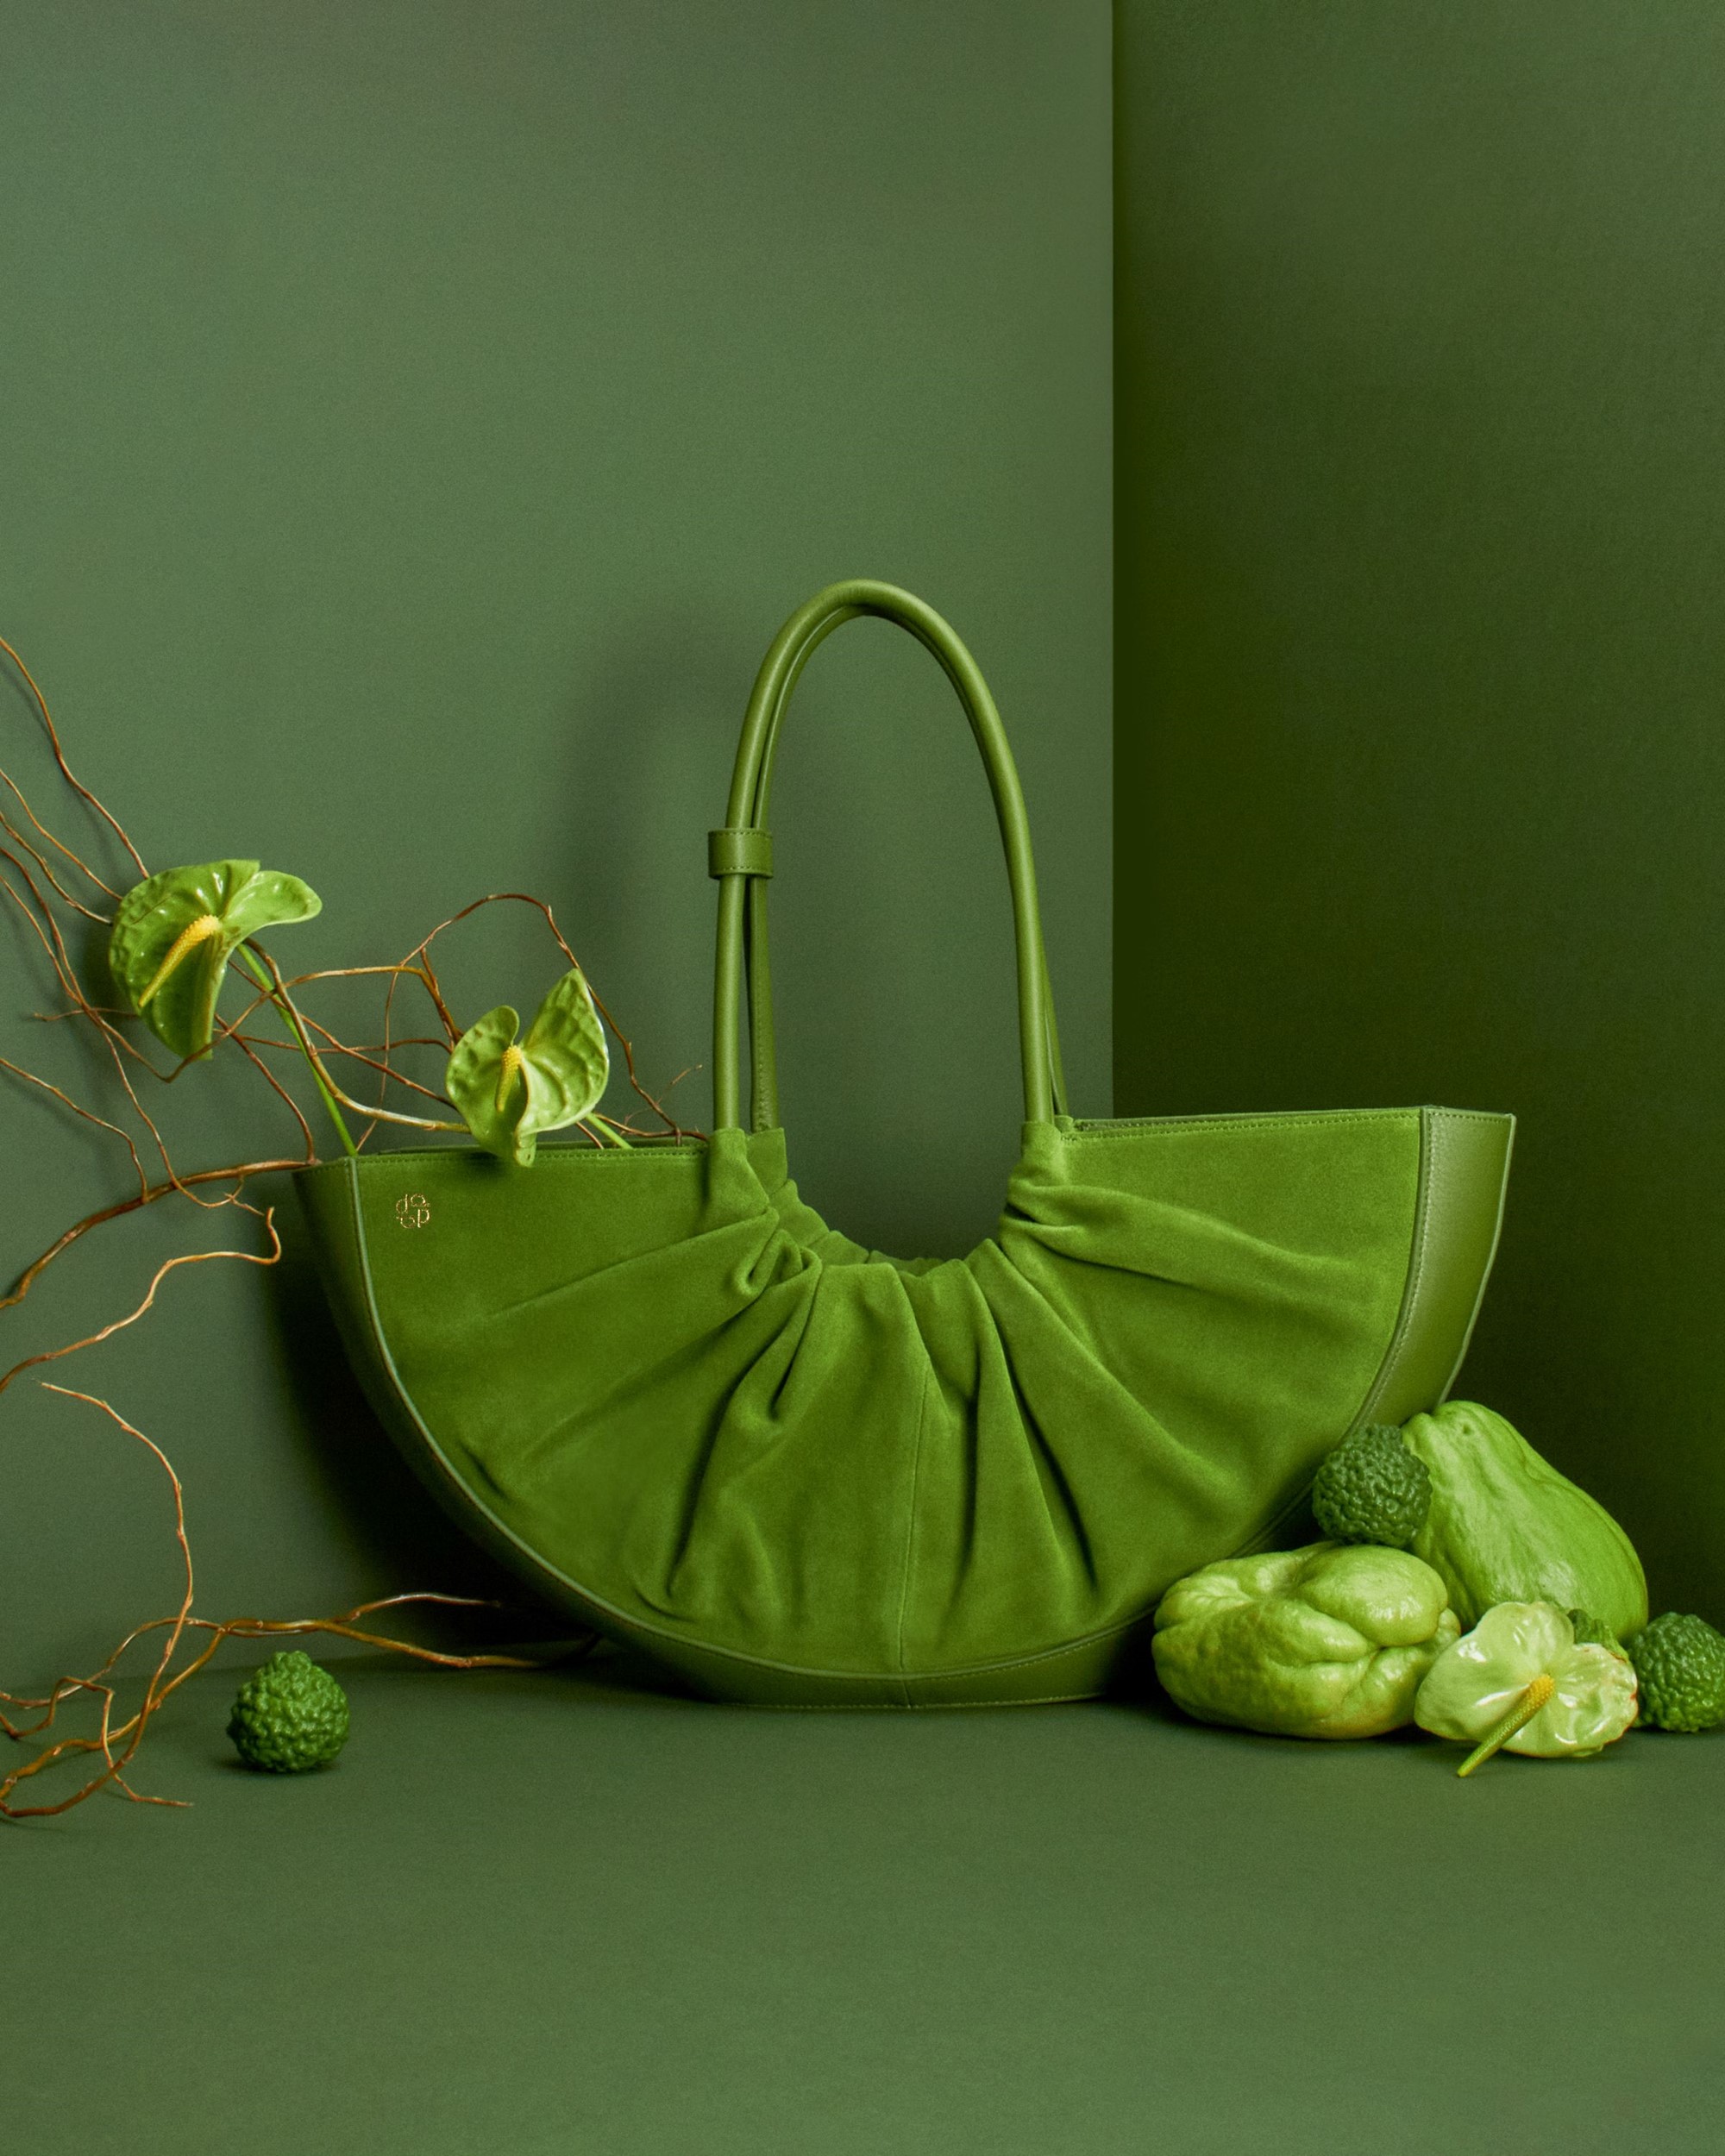 Into: What's Really Surreal with Bottega Veneta's Slime Green Tote Bag